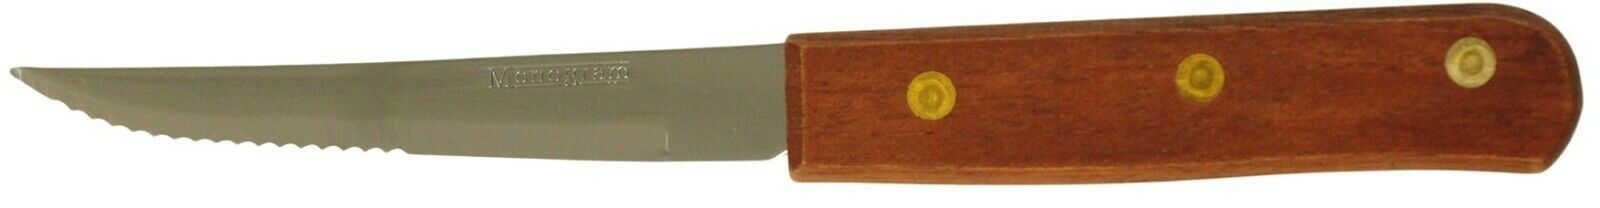 Acacia Wood Handle Set Of 8 Steak Knives & Forks Wooden Handles Serrated